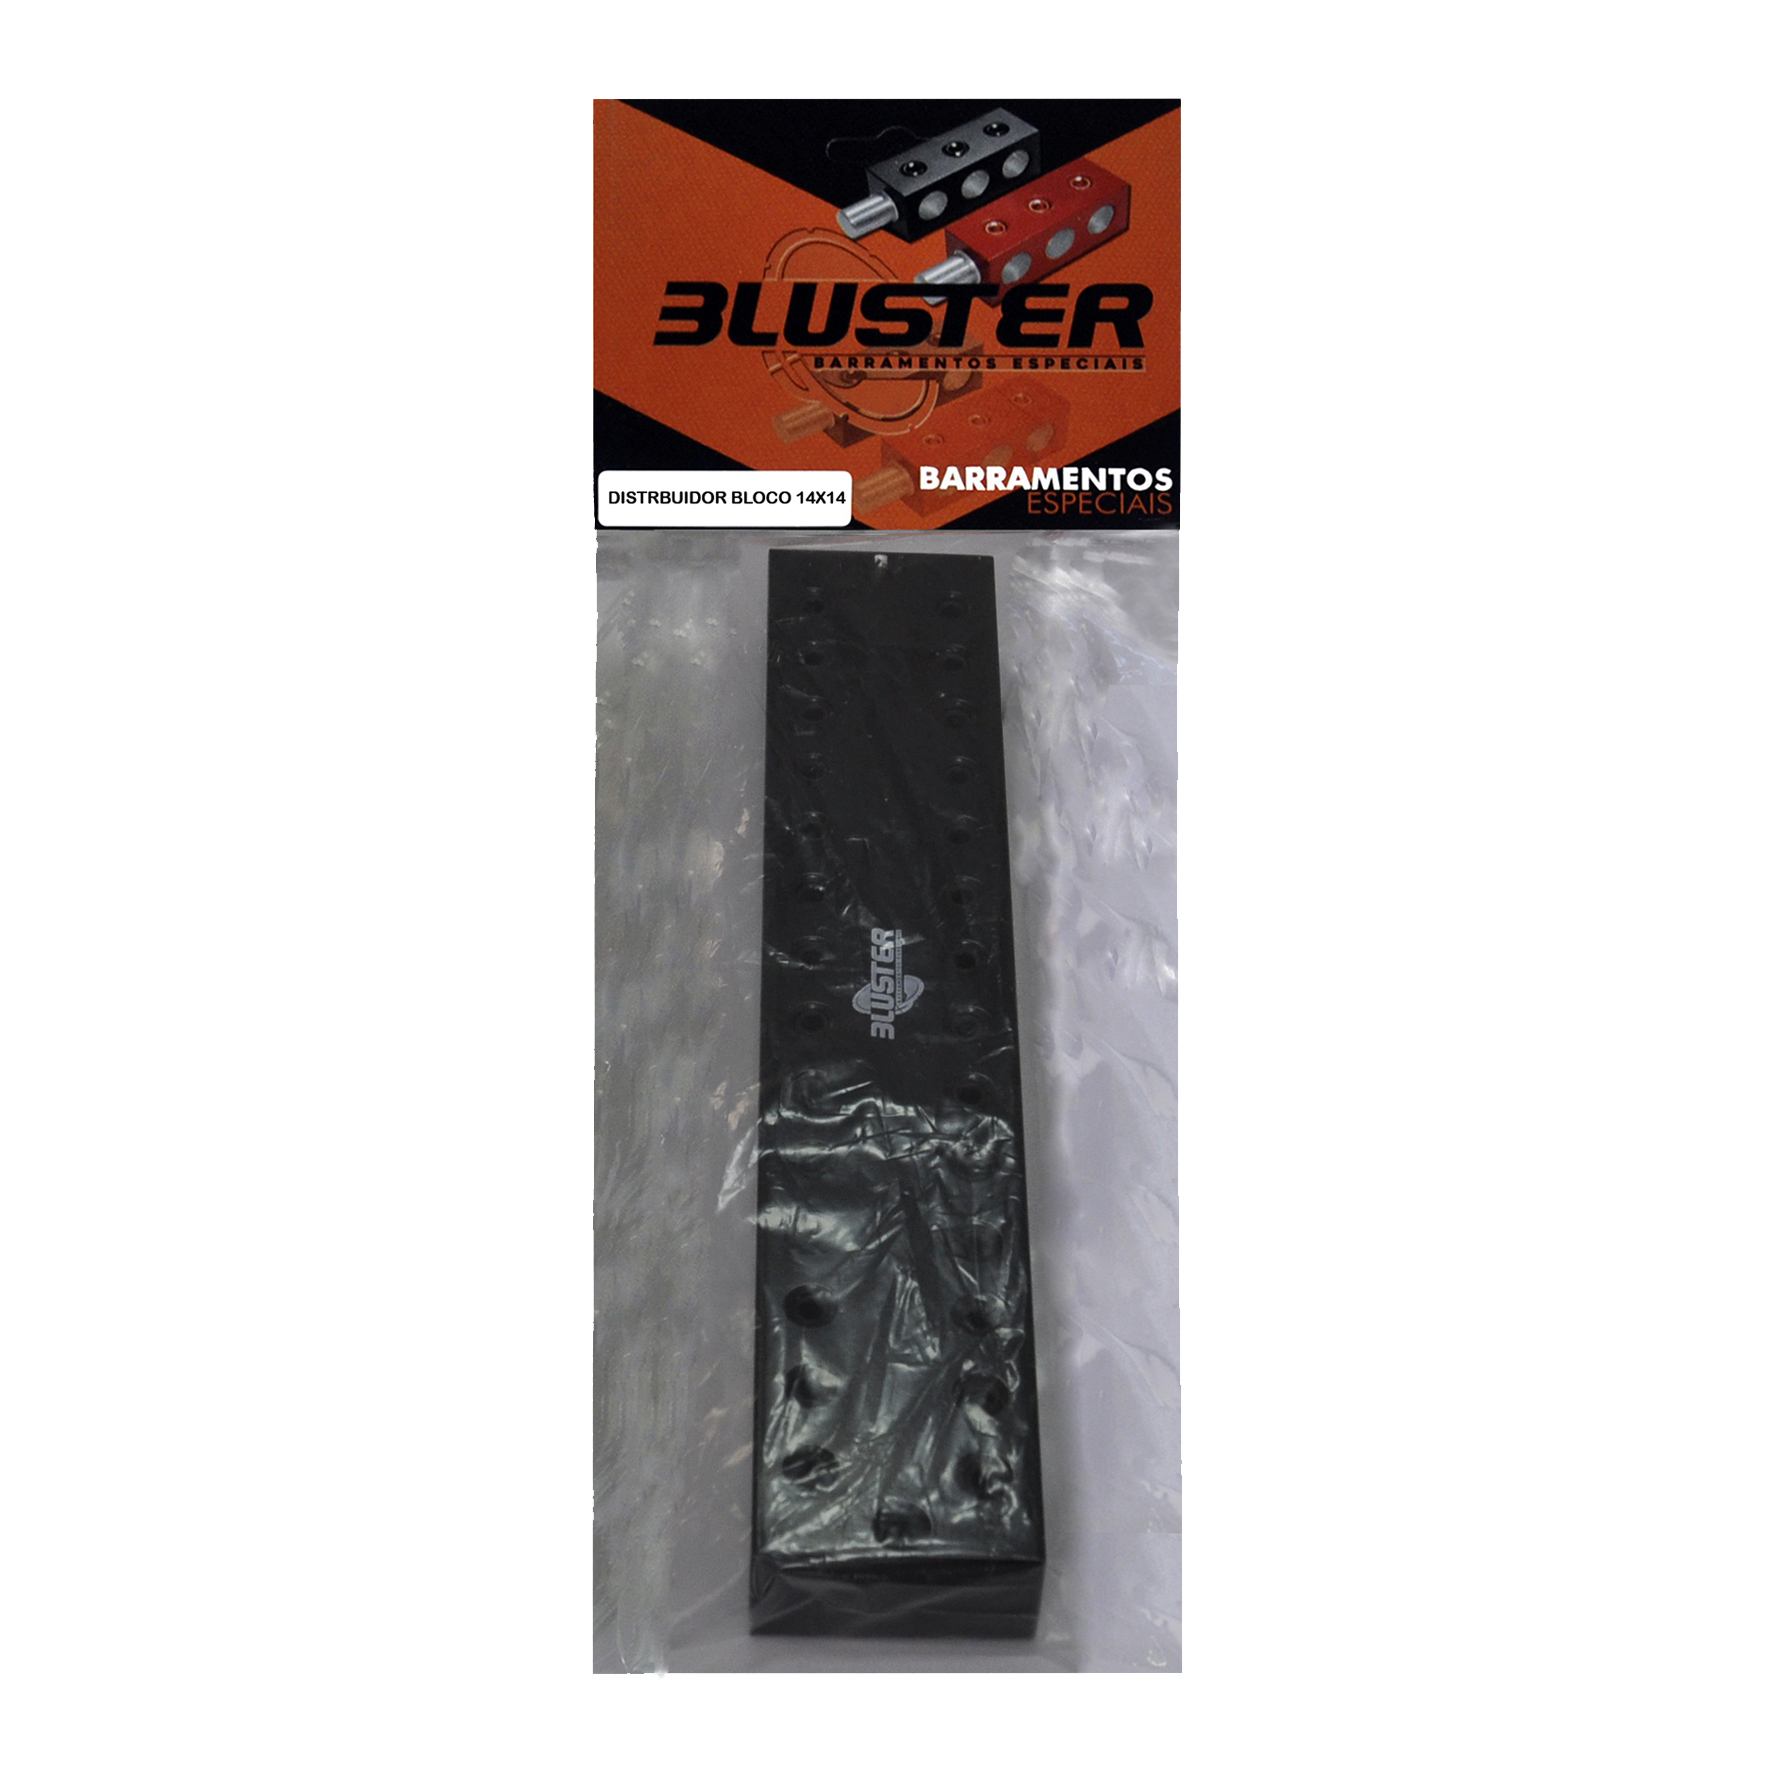 Distribuidor Bloco Bluster 14×14 Vista Superior P